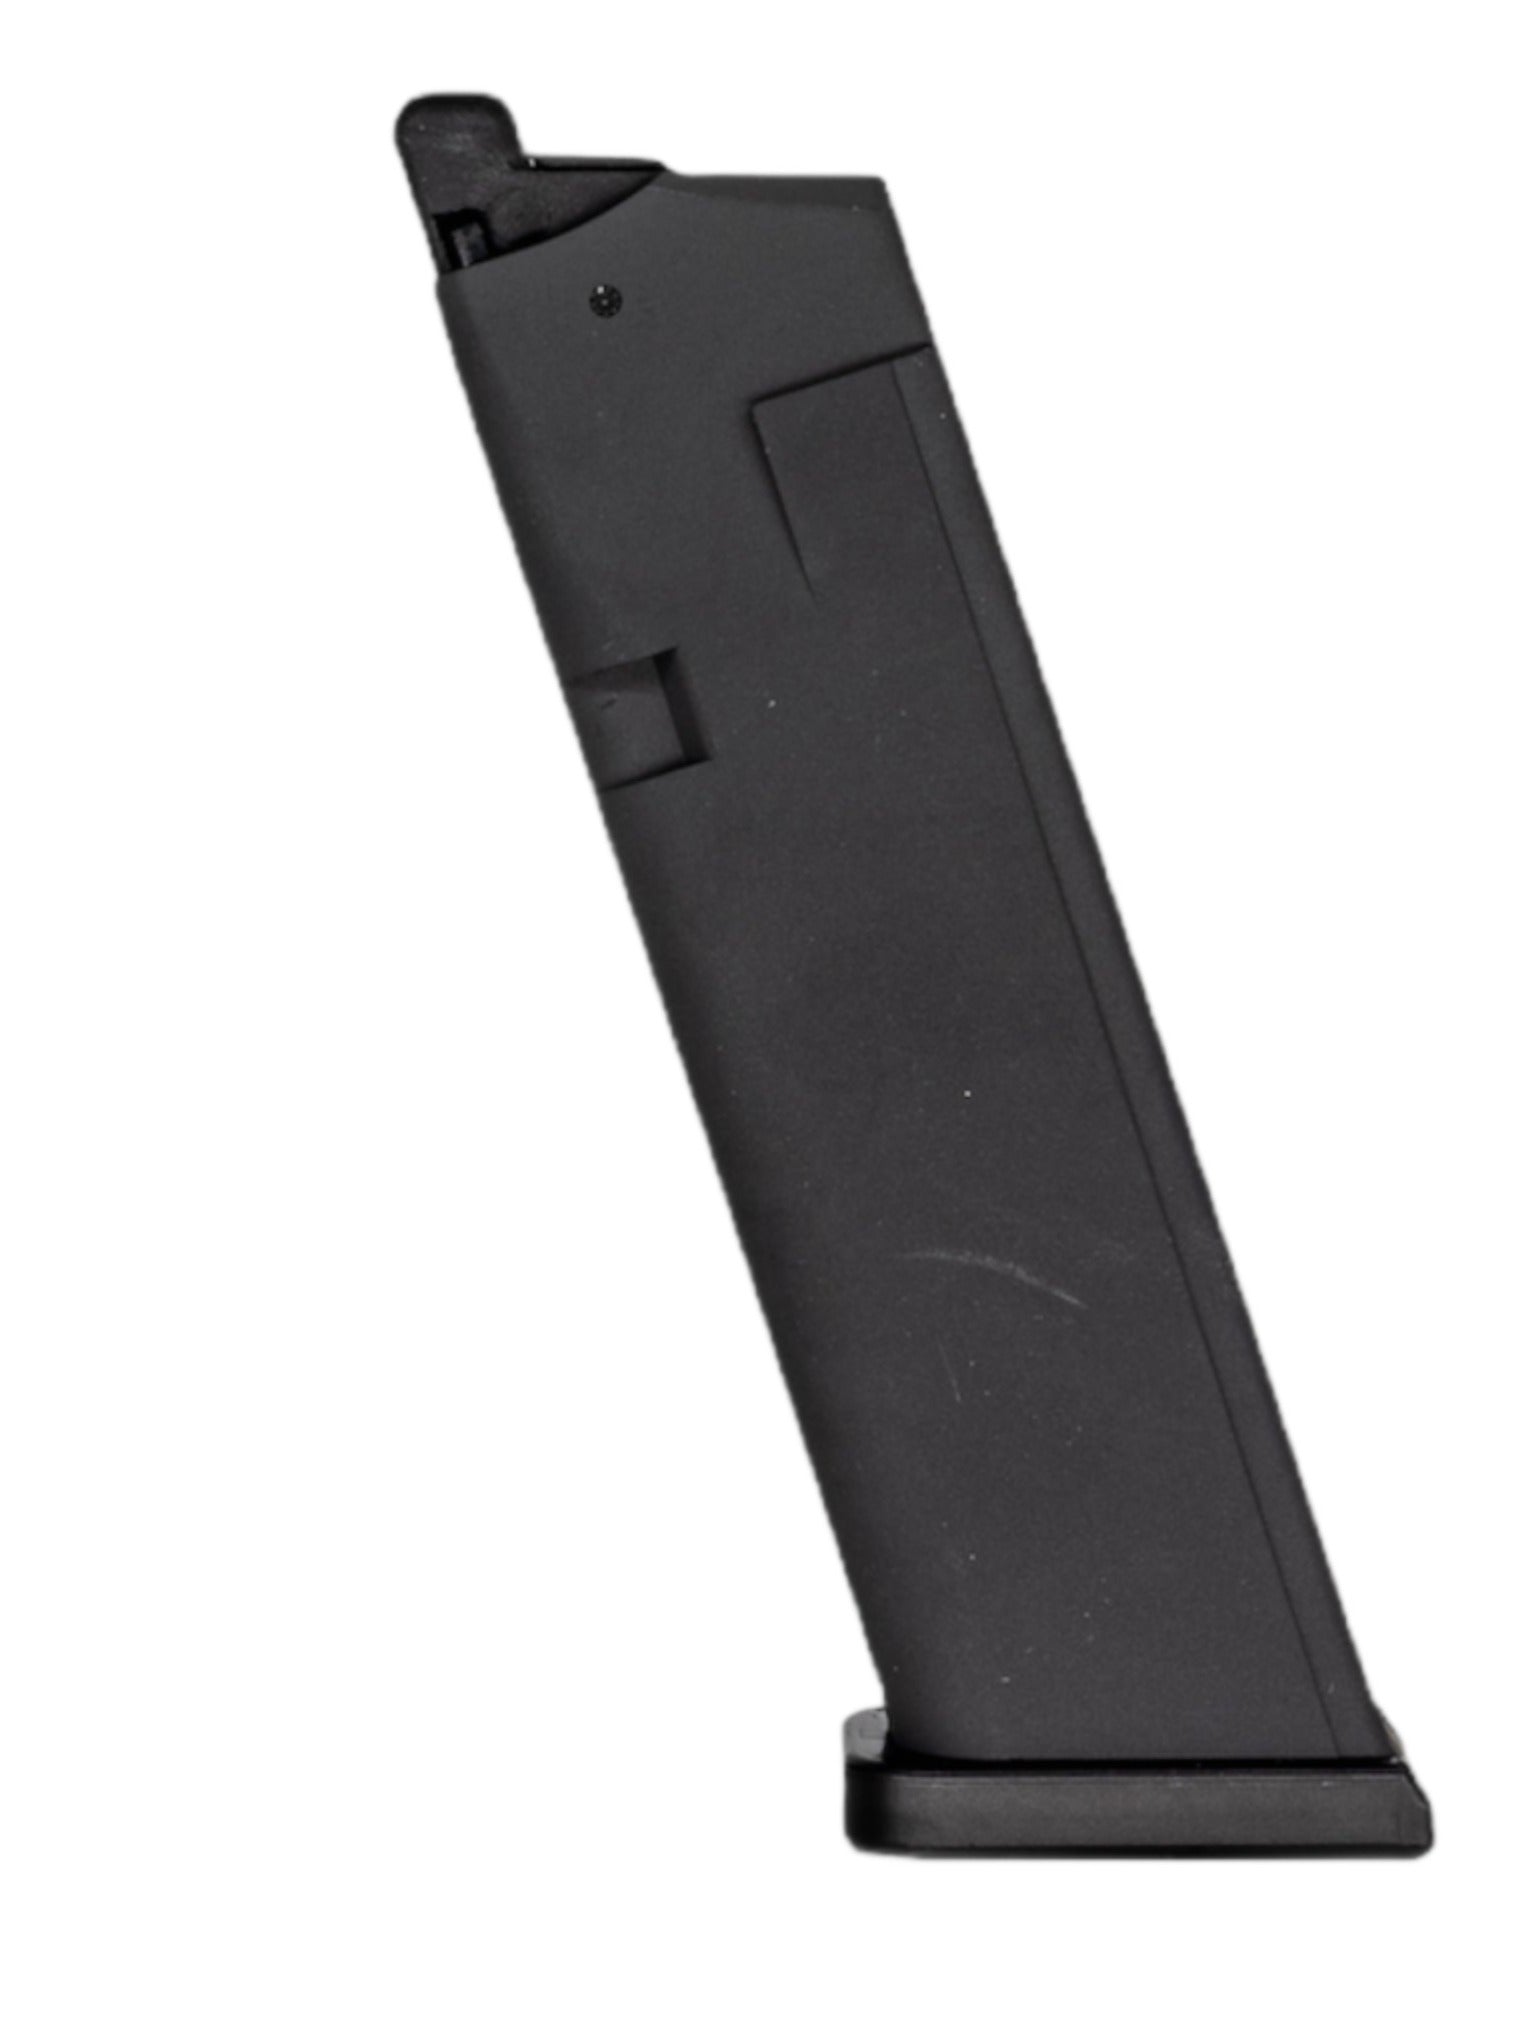 6mm Magazine 21 Rds for HFC Glock 17 CO2 Gen 4 - ssairsoft.com